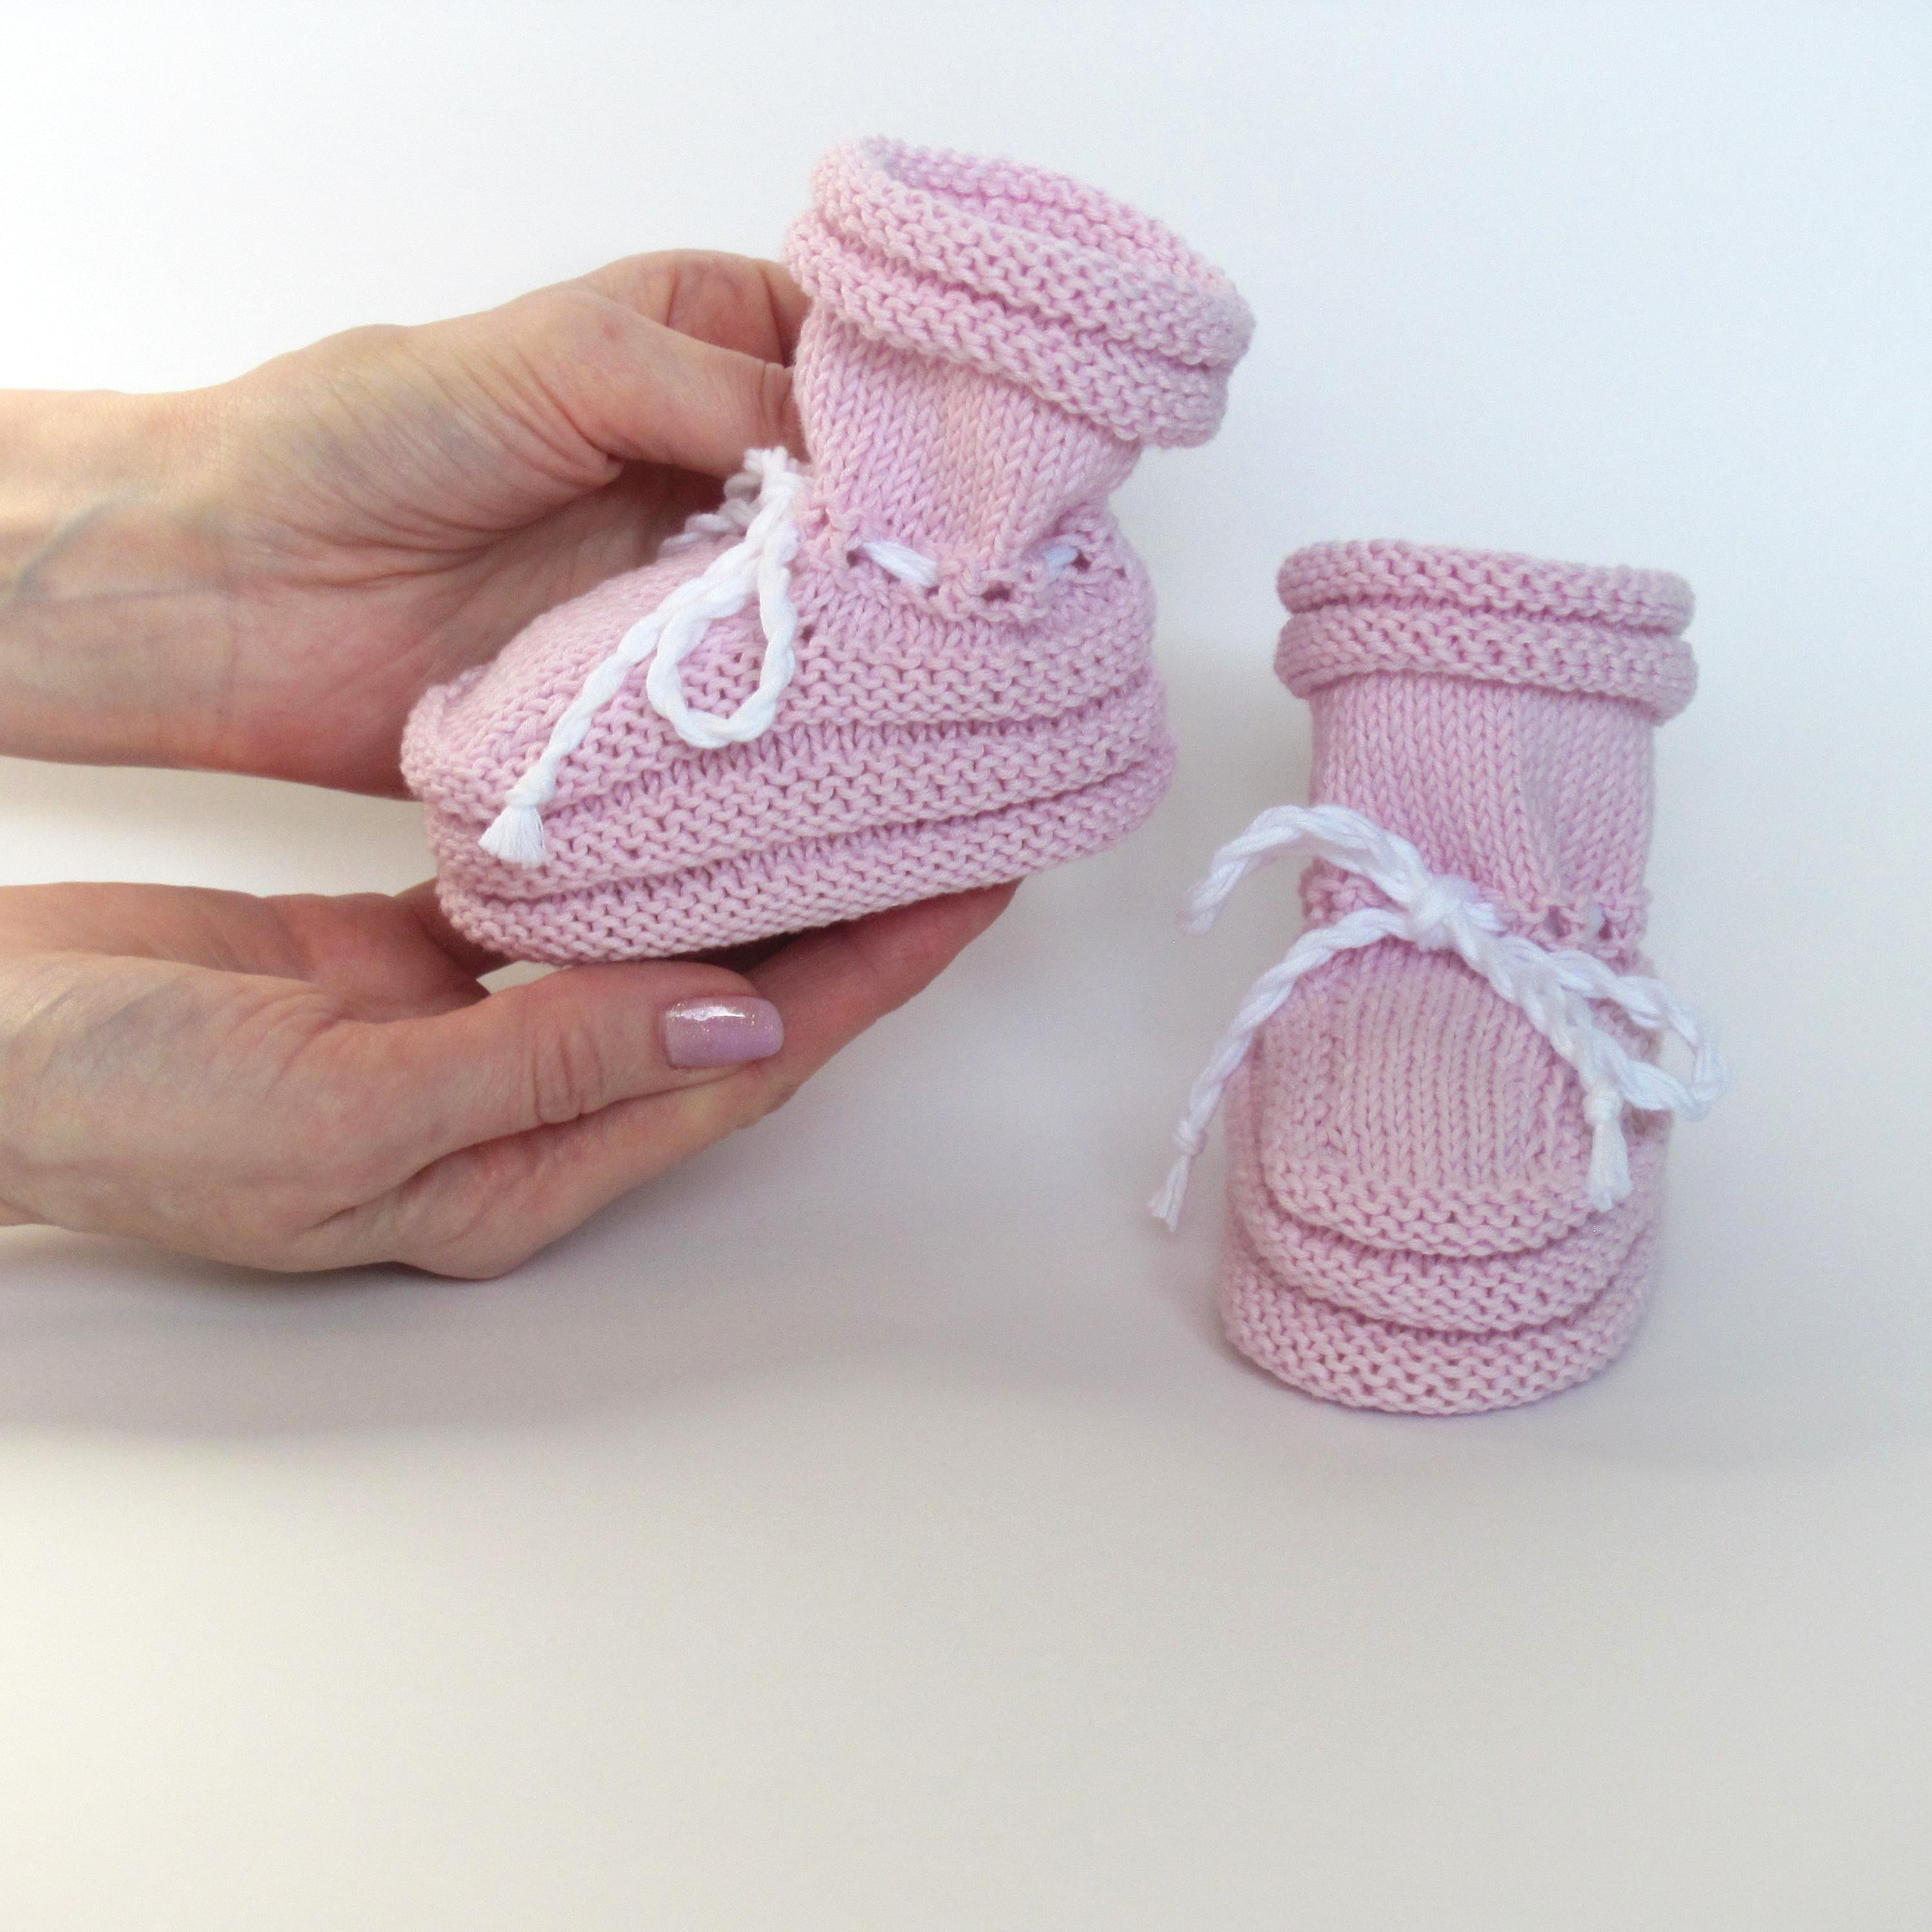 Babies Booties Knitting Pattern Knit Ba Booties Illustrated Knitting Pattern